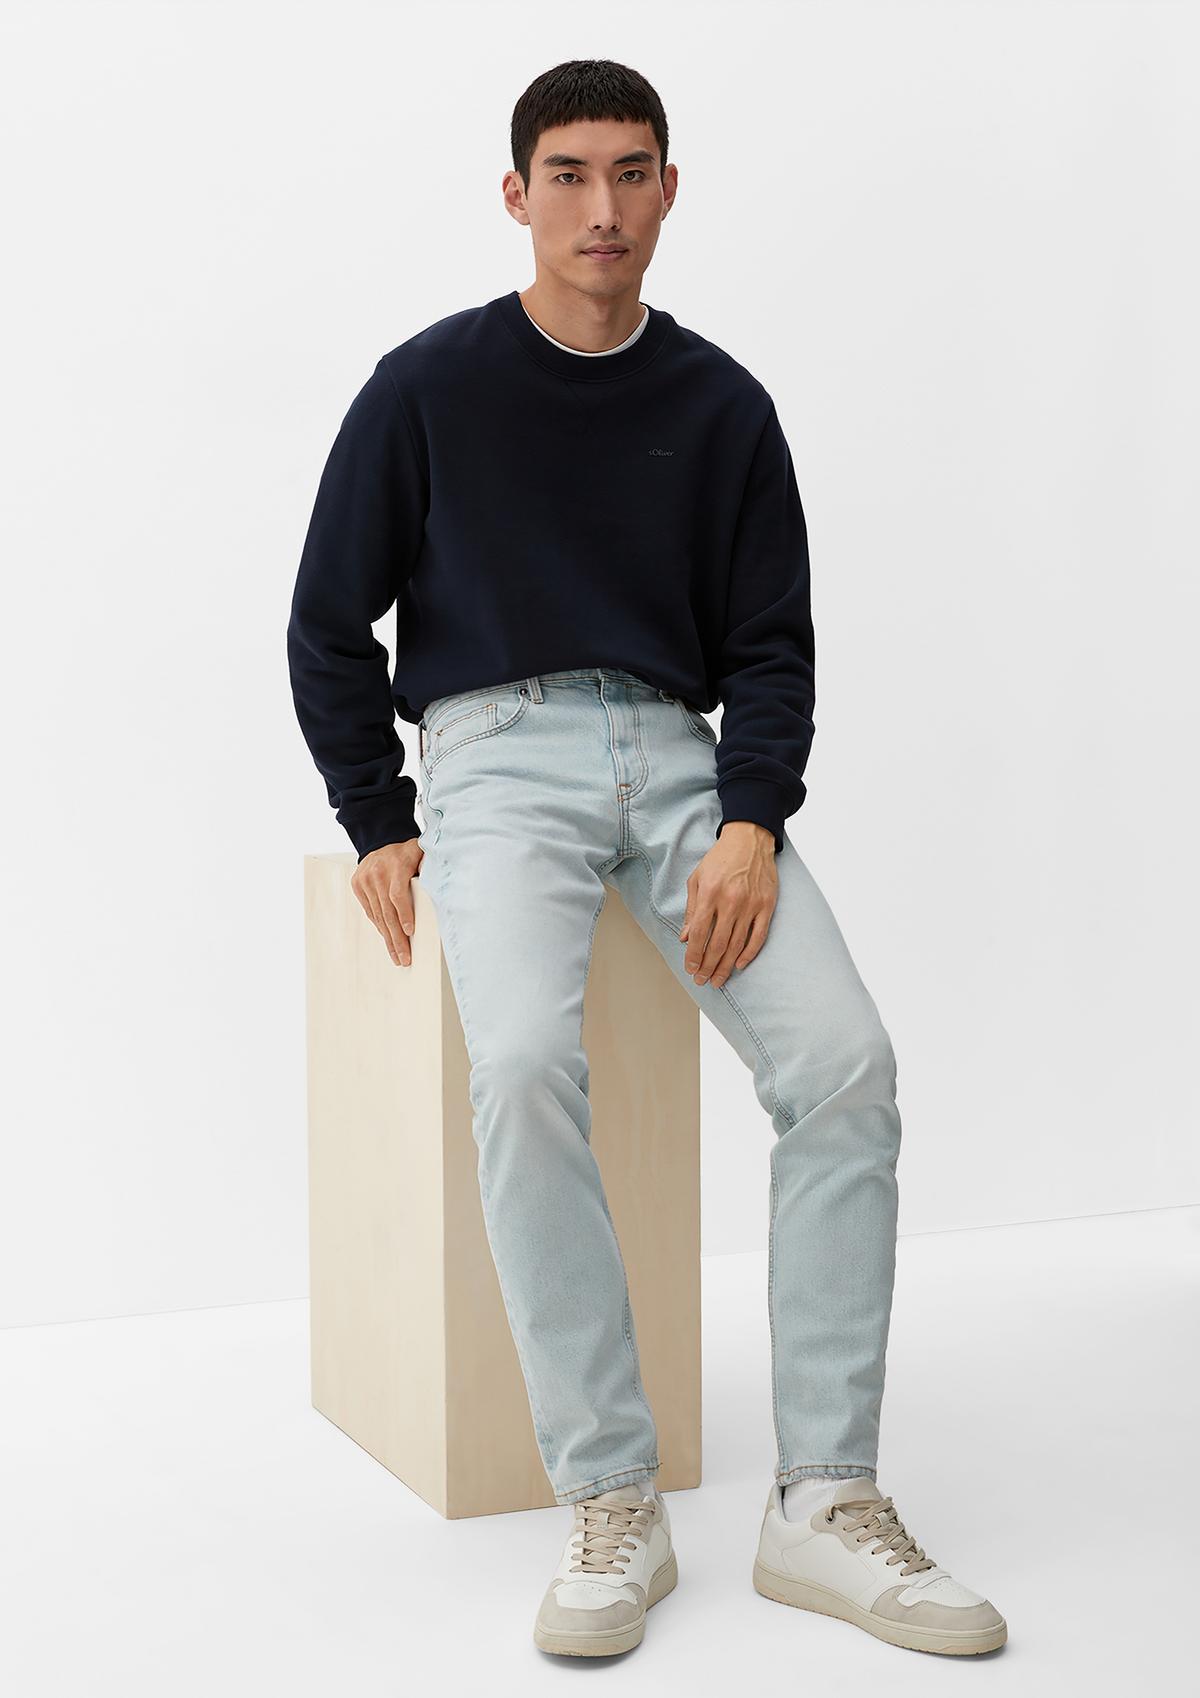 Jeans / regular / - light blue mid fit rise straight / leg